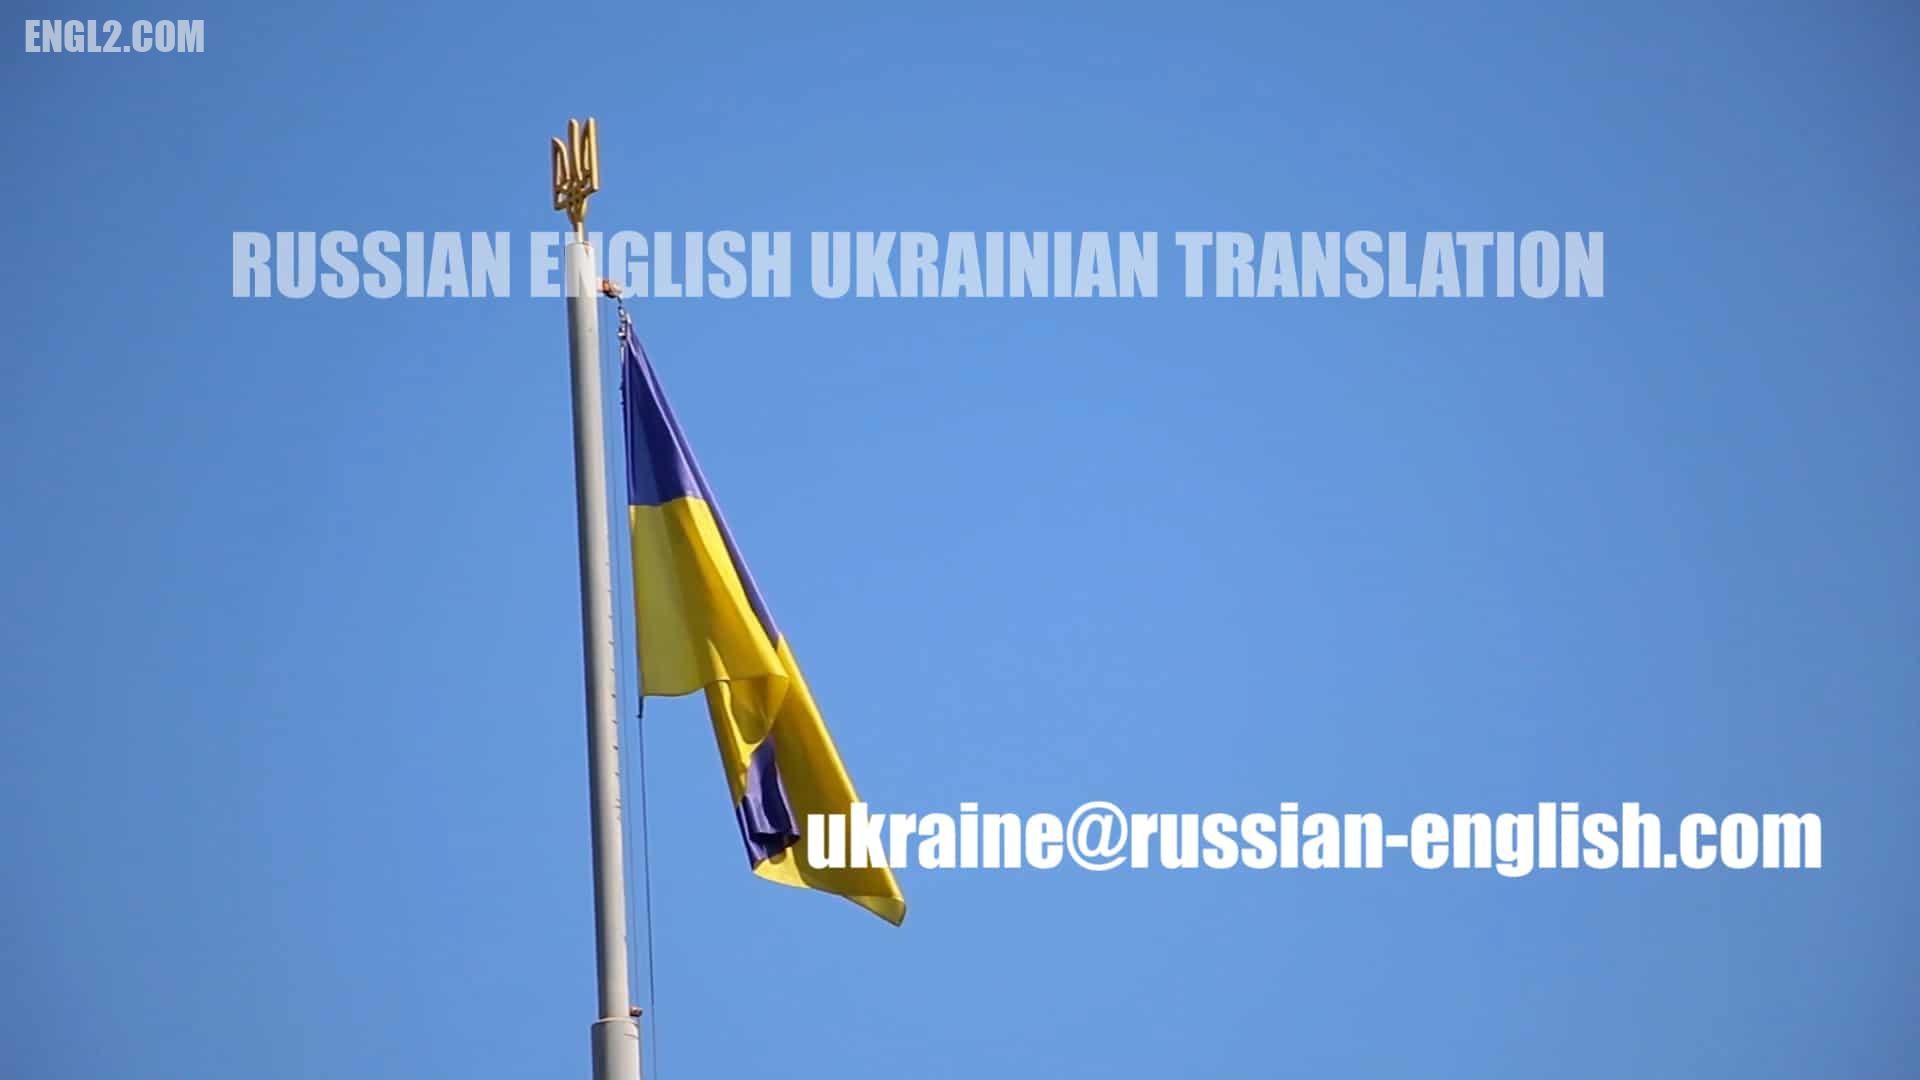 Russian English Ukrainian Translator in London